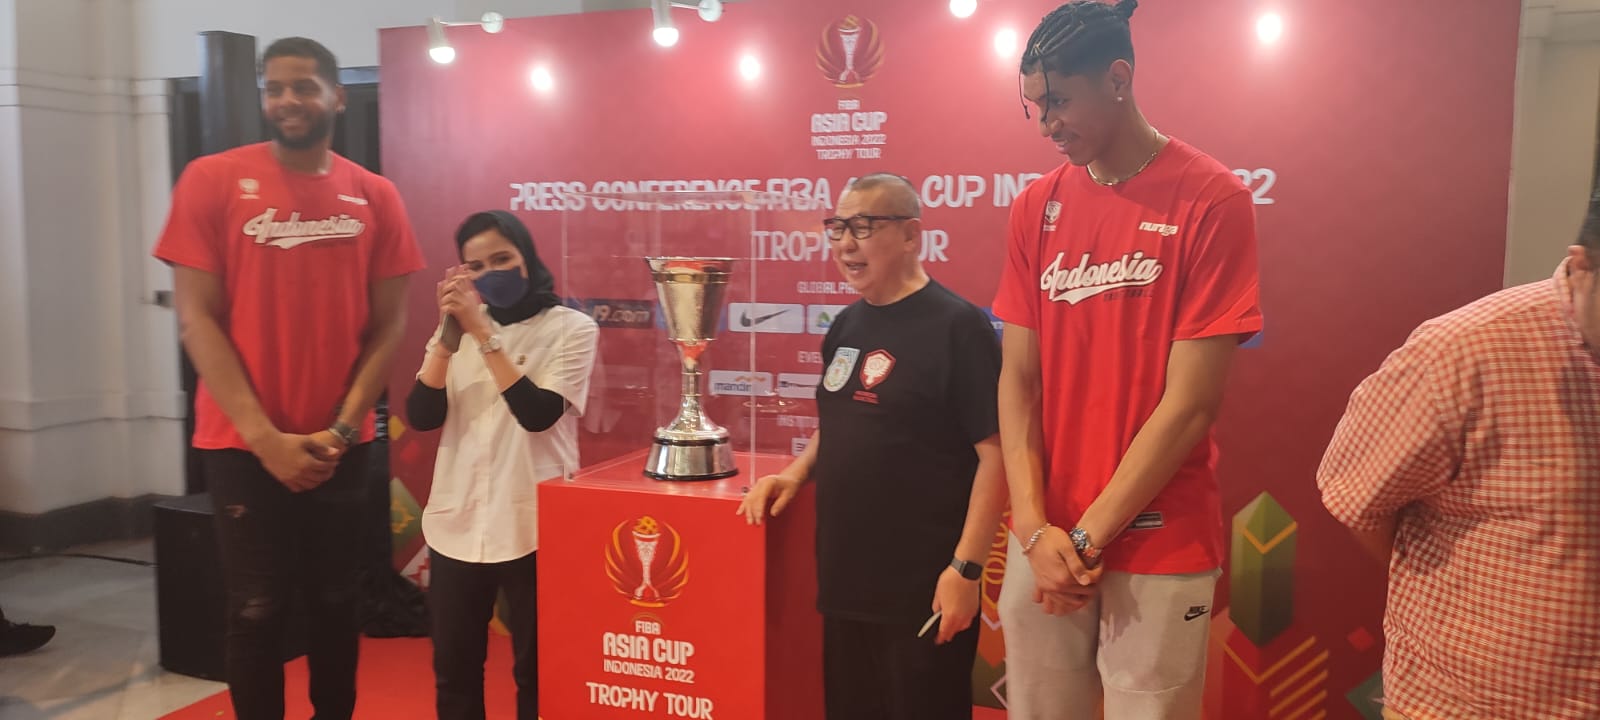 Dessy Ruhati Sangat Apresiasi Event FIBA Asia Cup 2022 